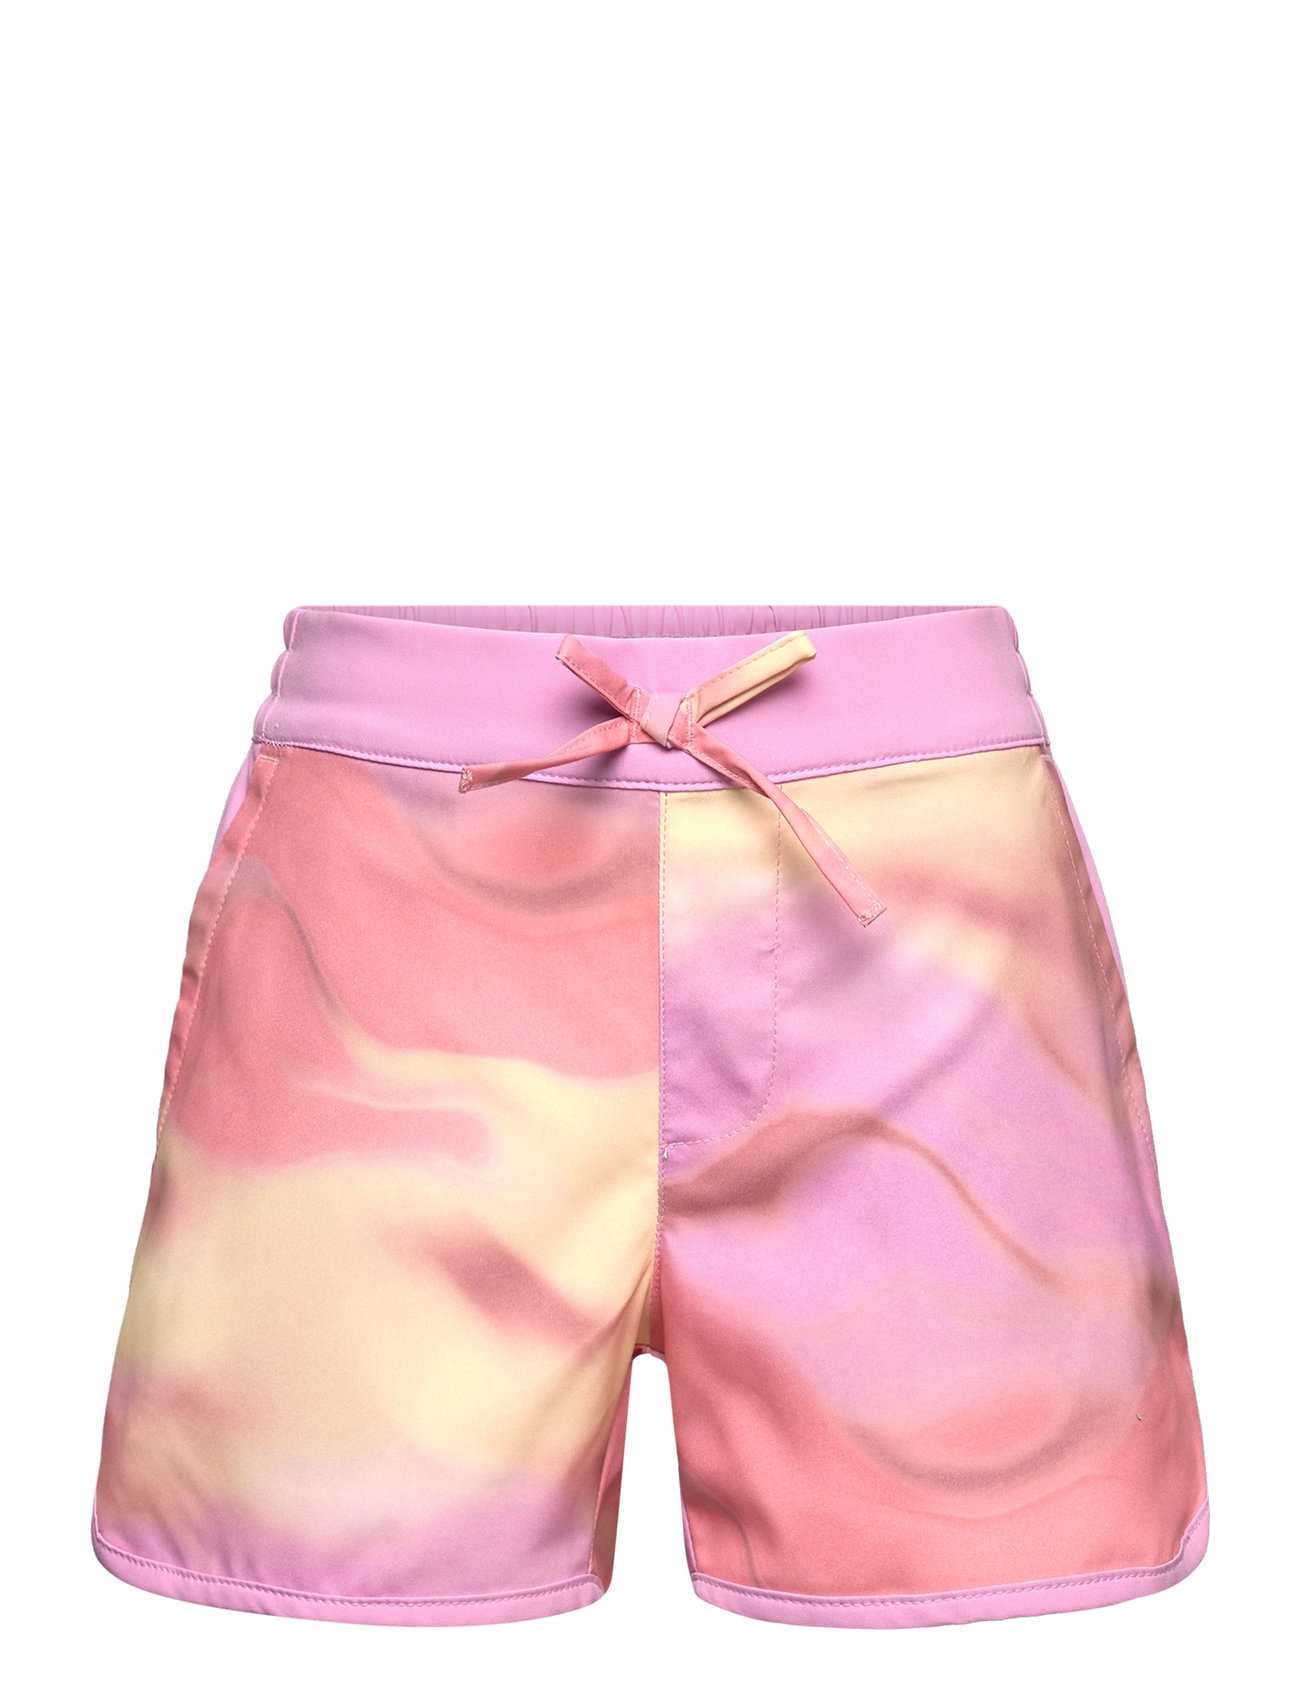 Sandy Shores Boardshort Sport Shorts Sport Shorts Pink Columbia Sportswear